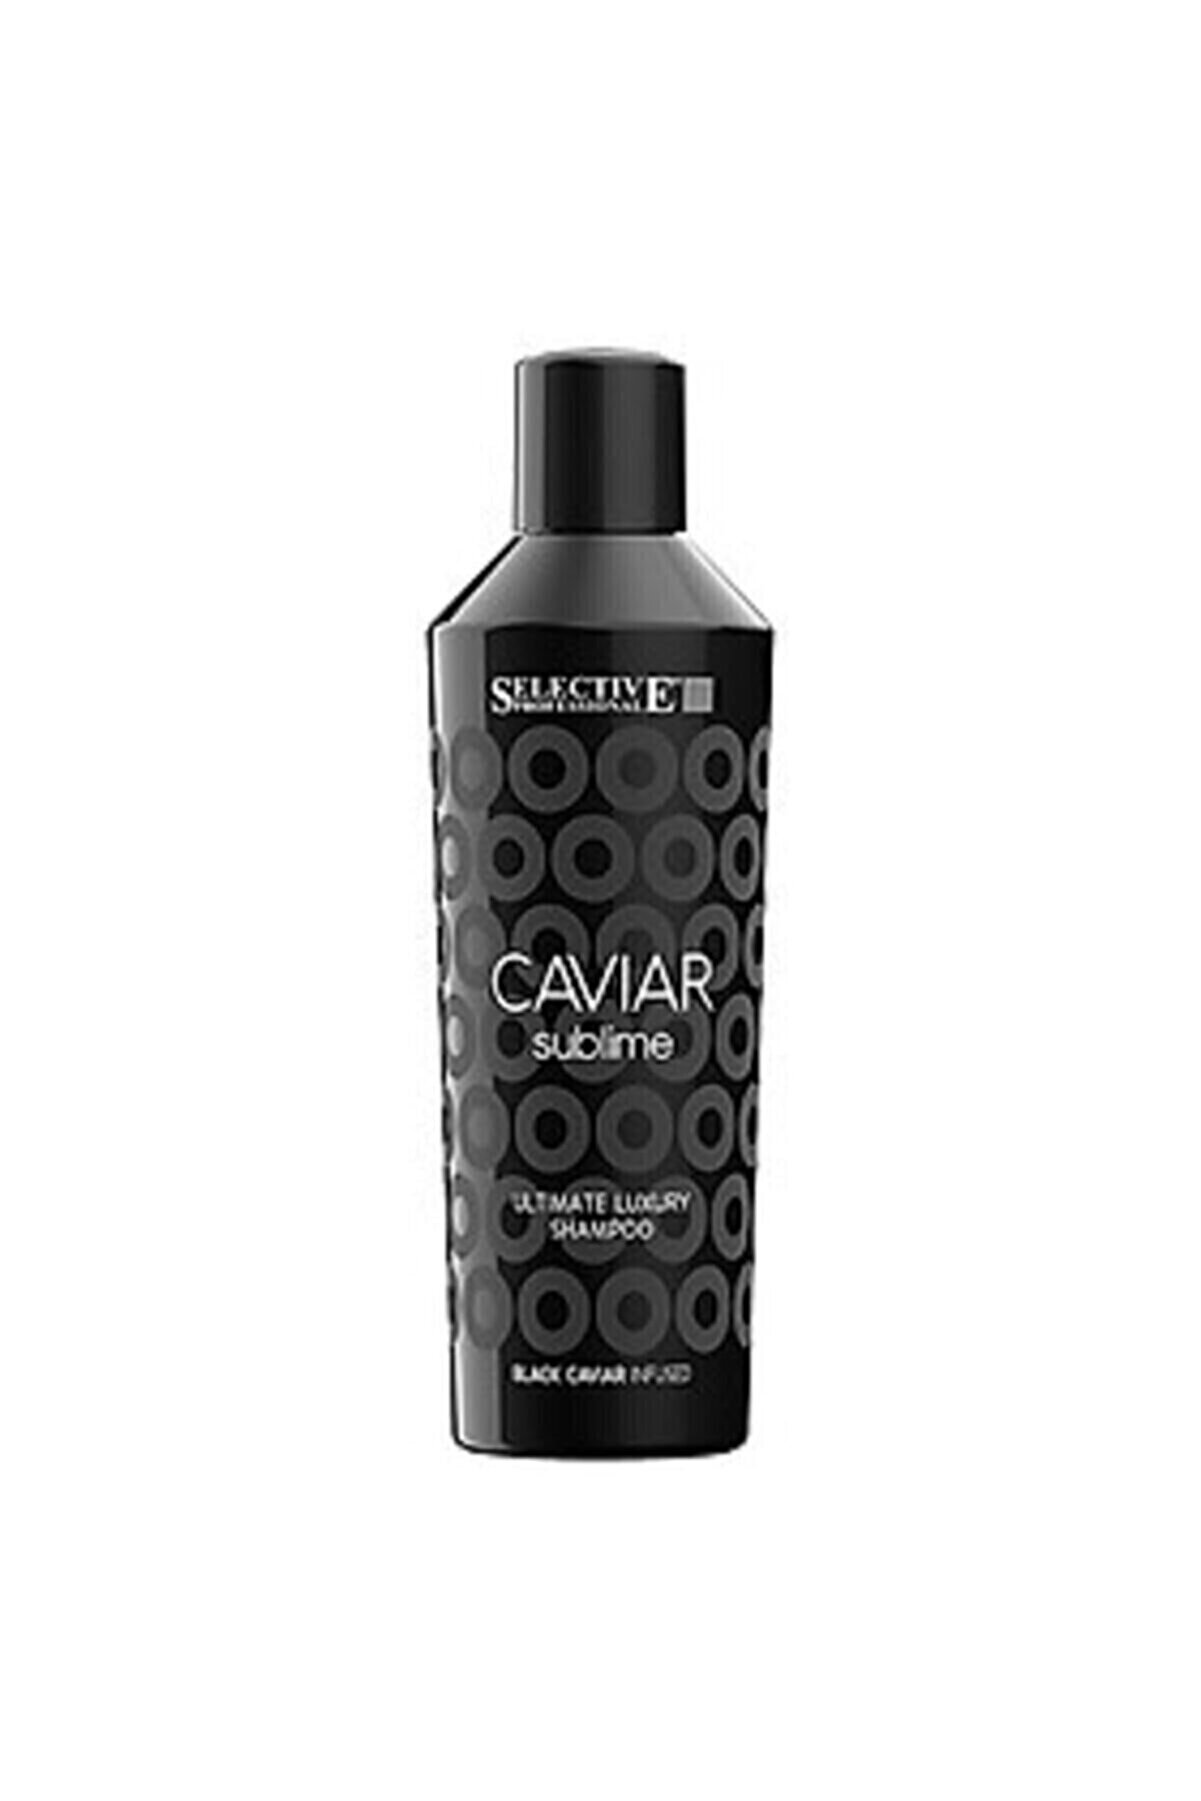 Selective Caviar Sublime Ultimate Luxury Şampuan 1000ml Onrness Cosmetıc